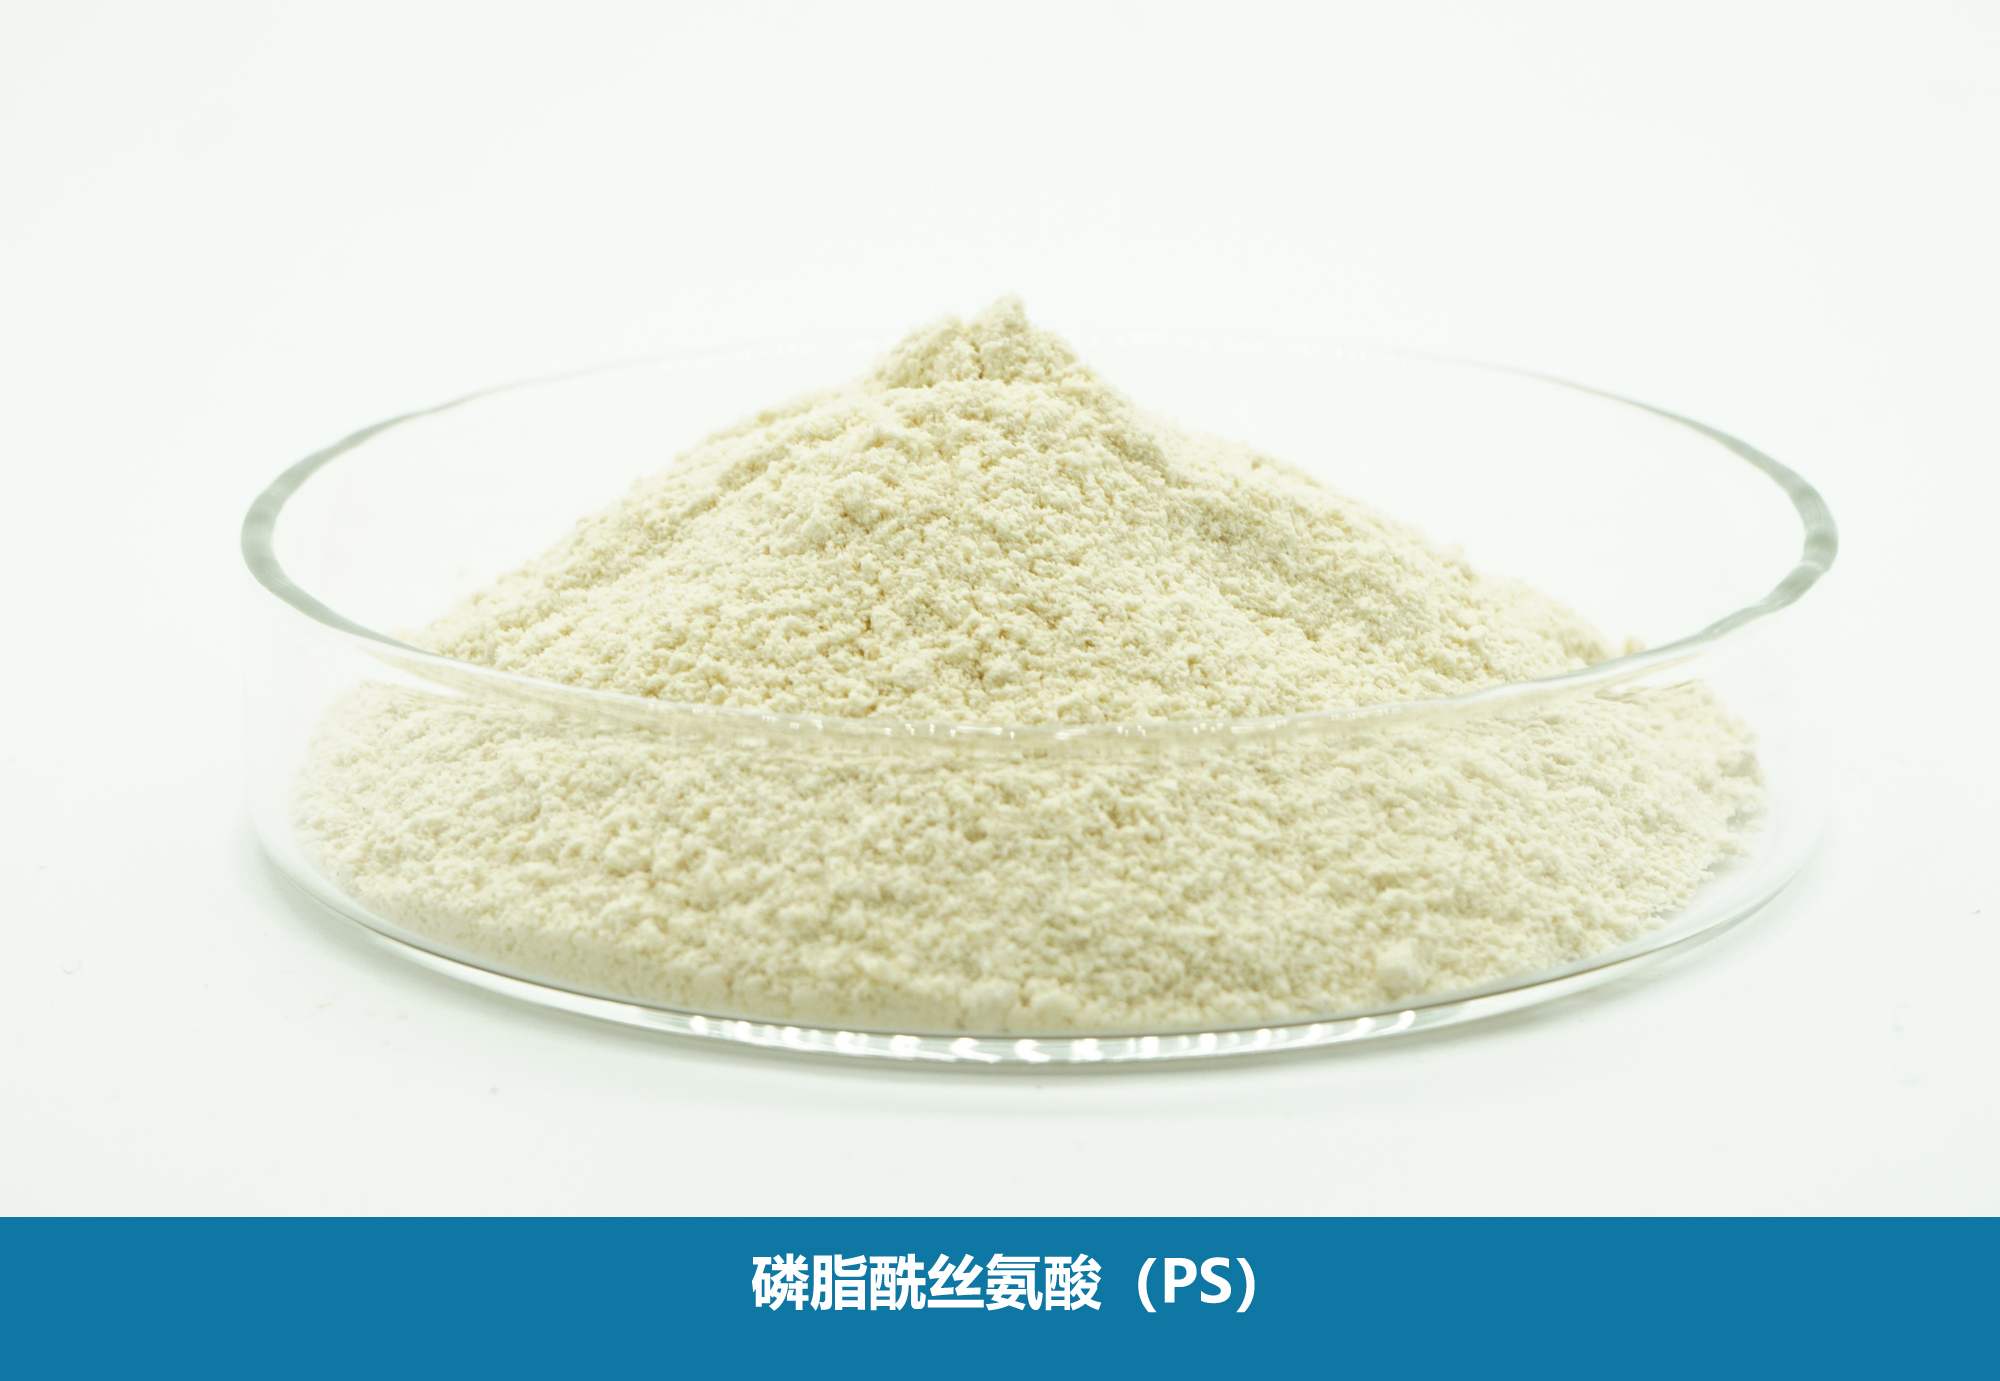 Phosphatidylserine powder supplier quotation